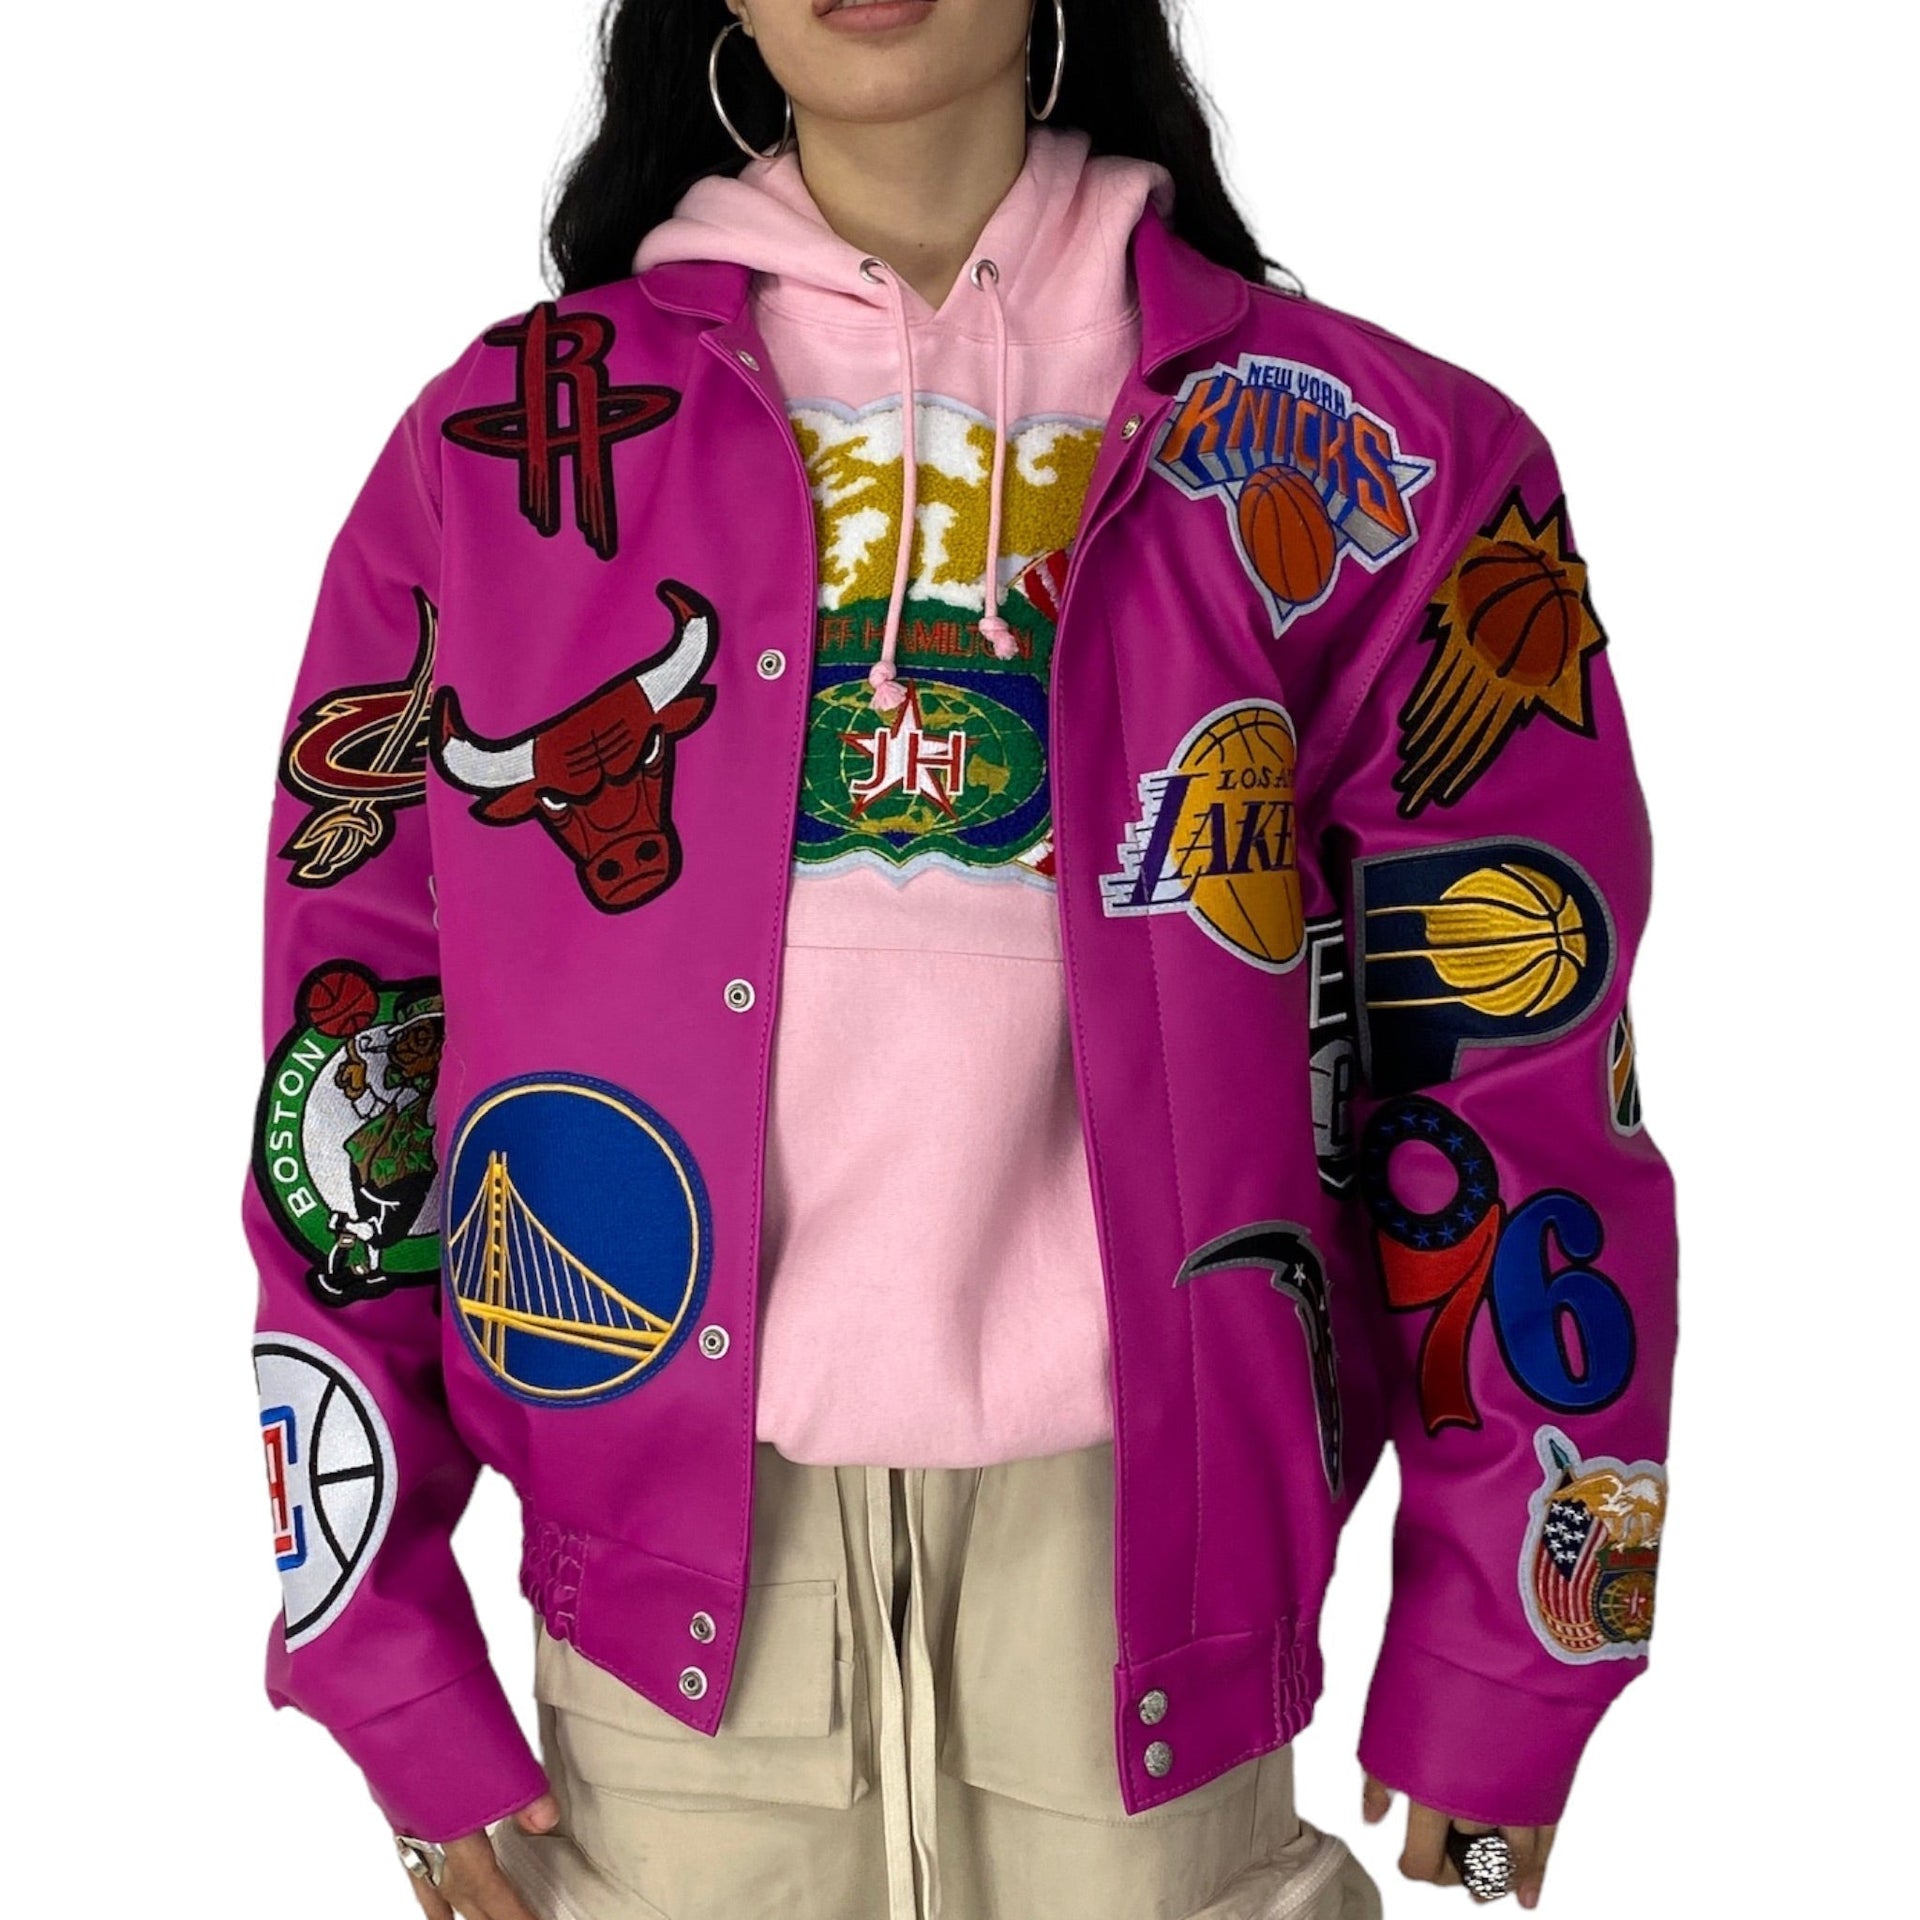 Maker of Jacket Fashion Jackets Pink NBA Teams Collage Jeff Hamilton Leather